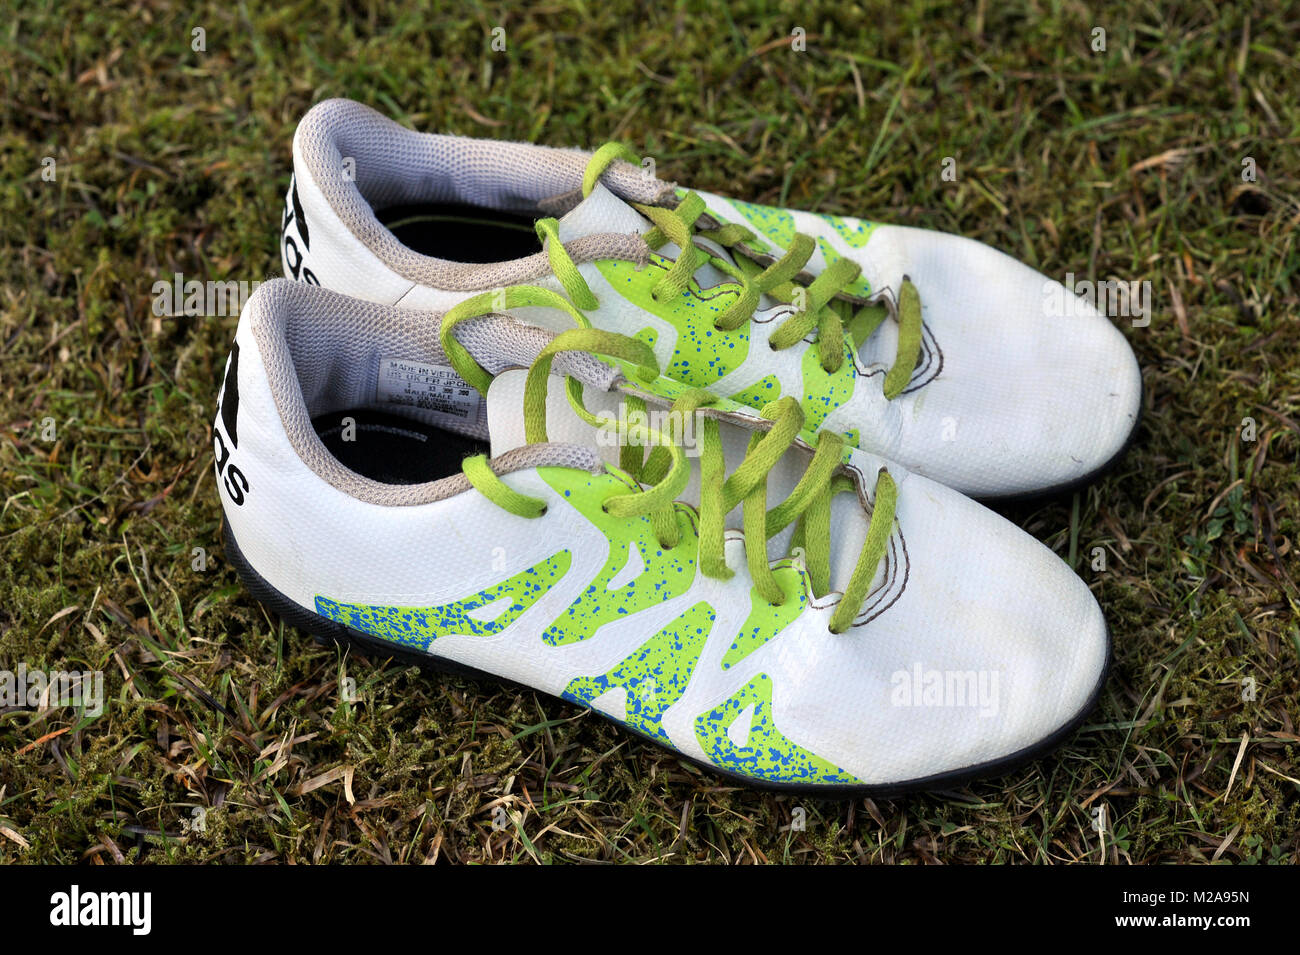 Children's football boots Stock Photo